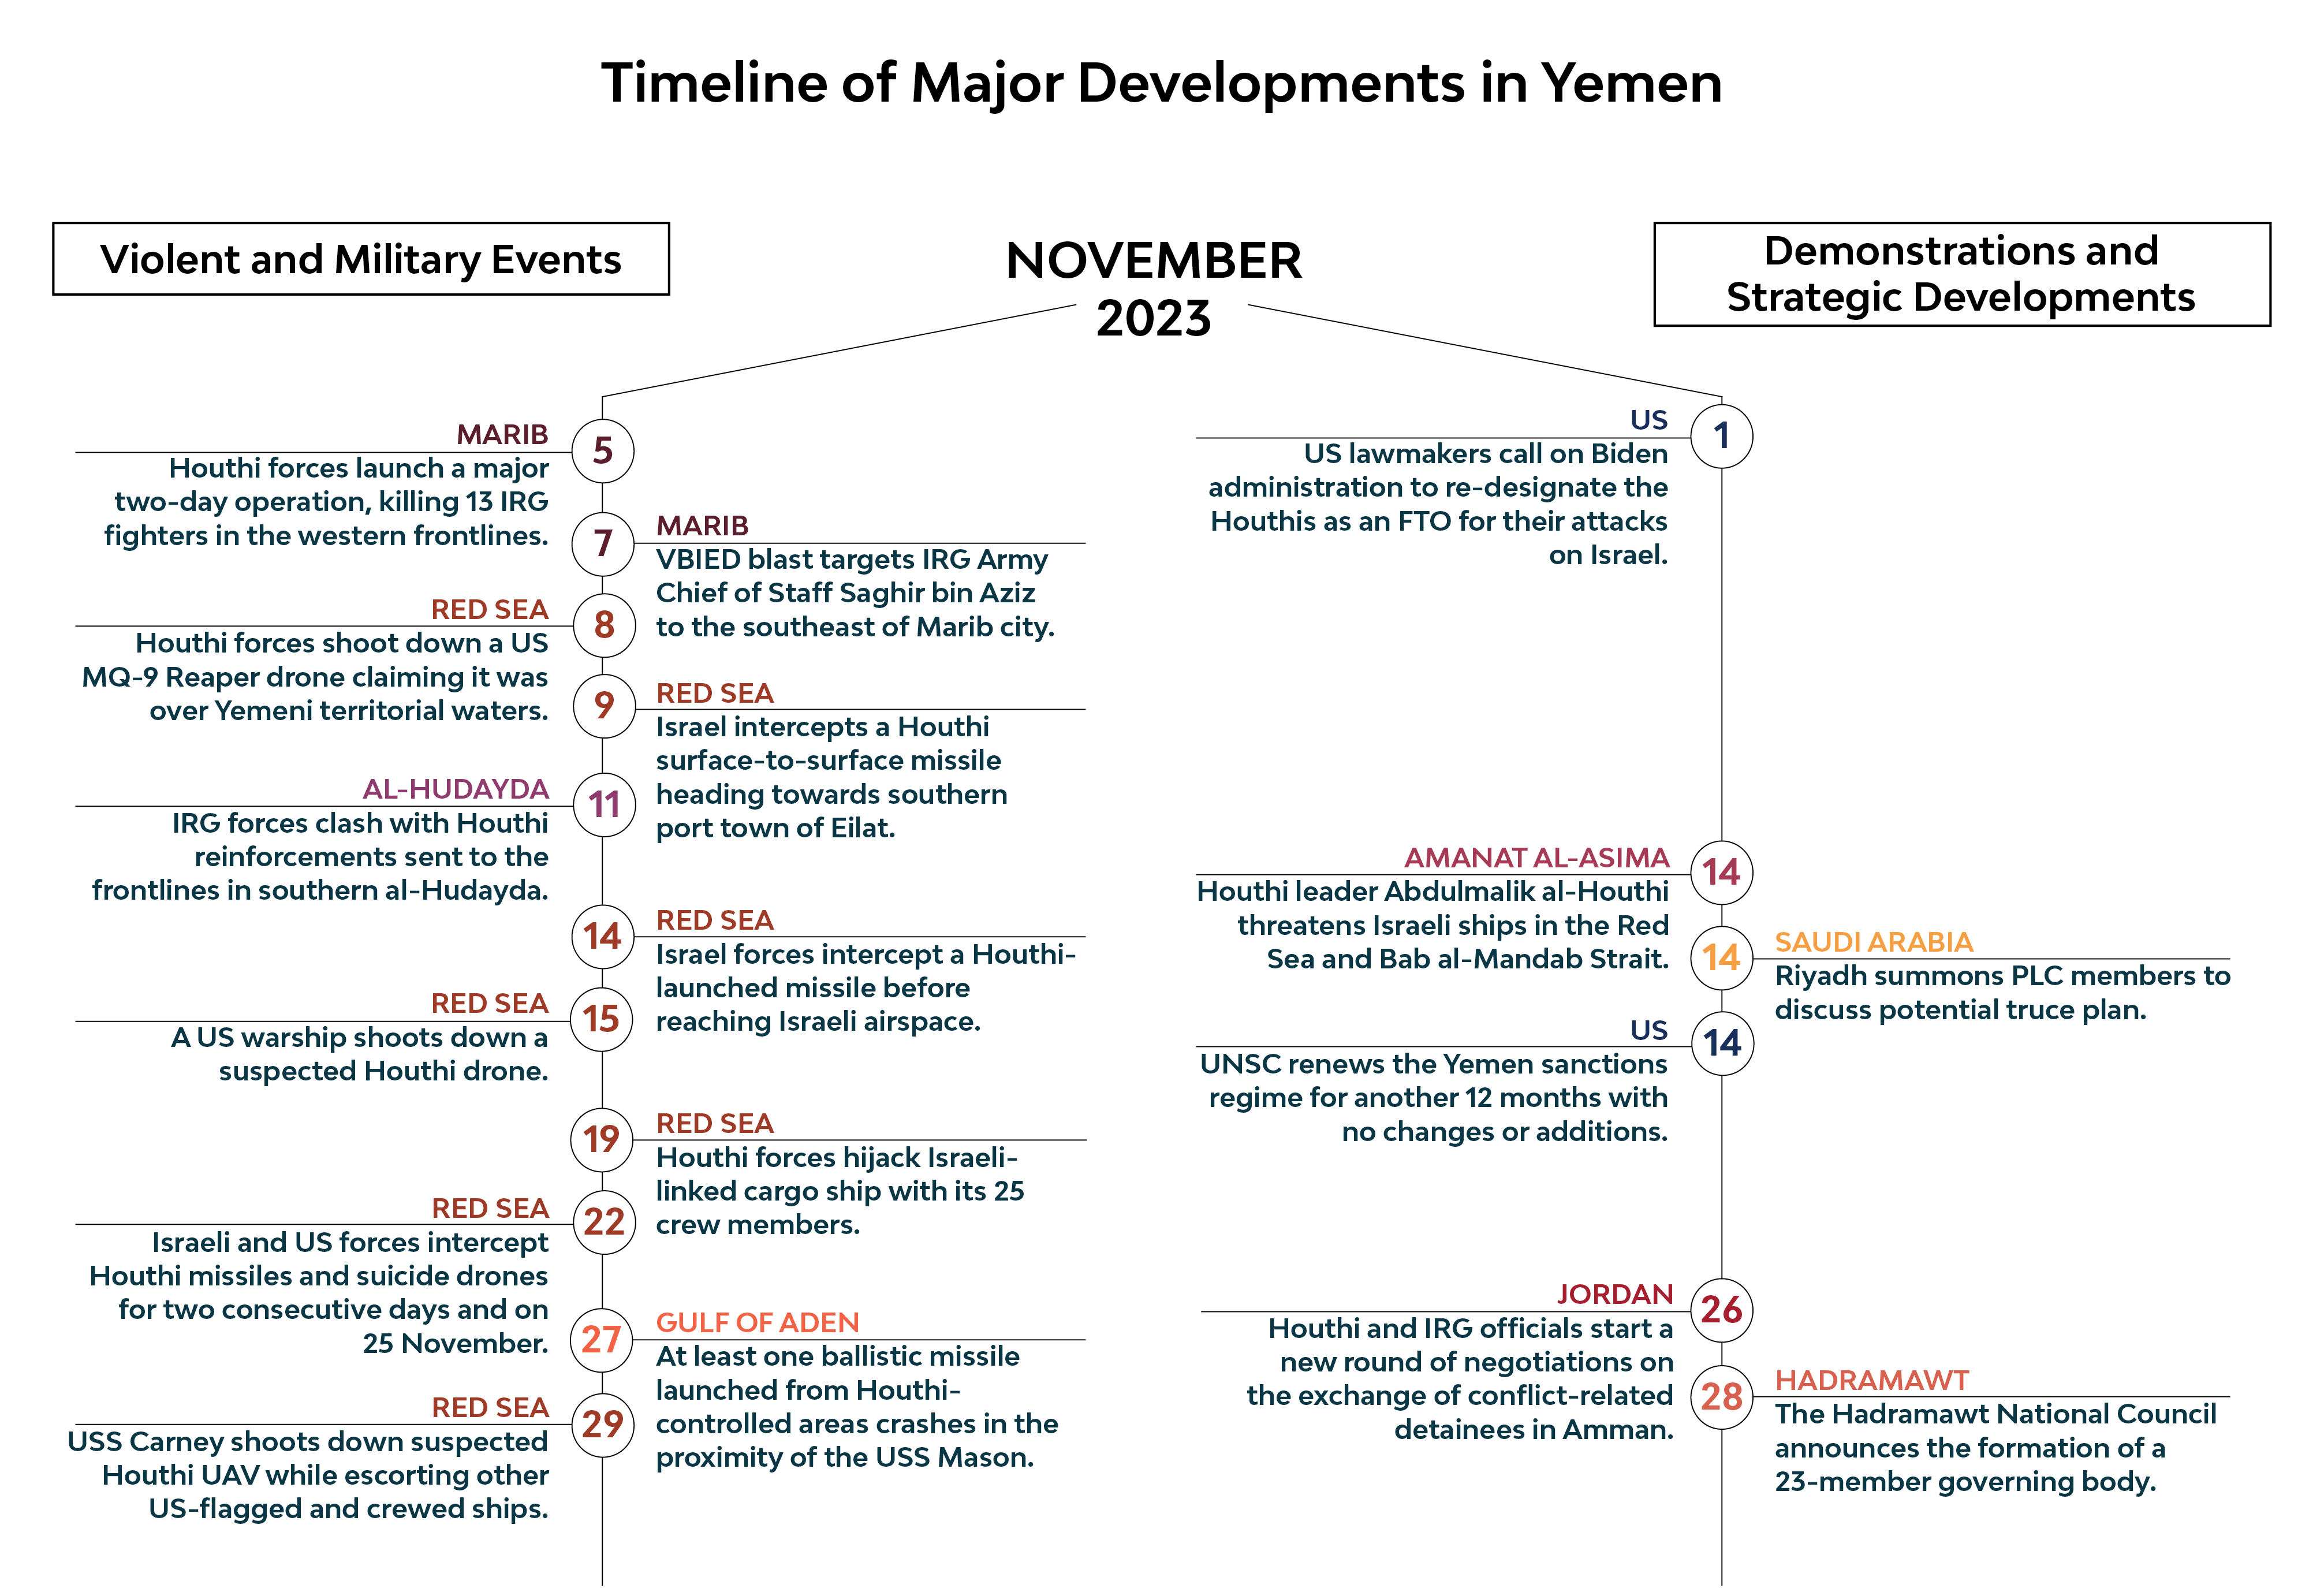 Timeline of major developments in Yemen November 2023